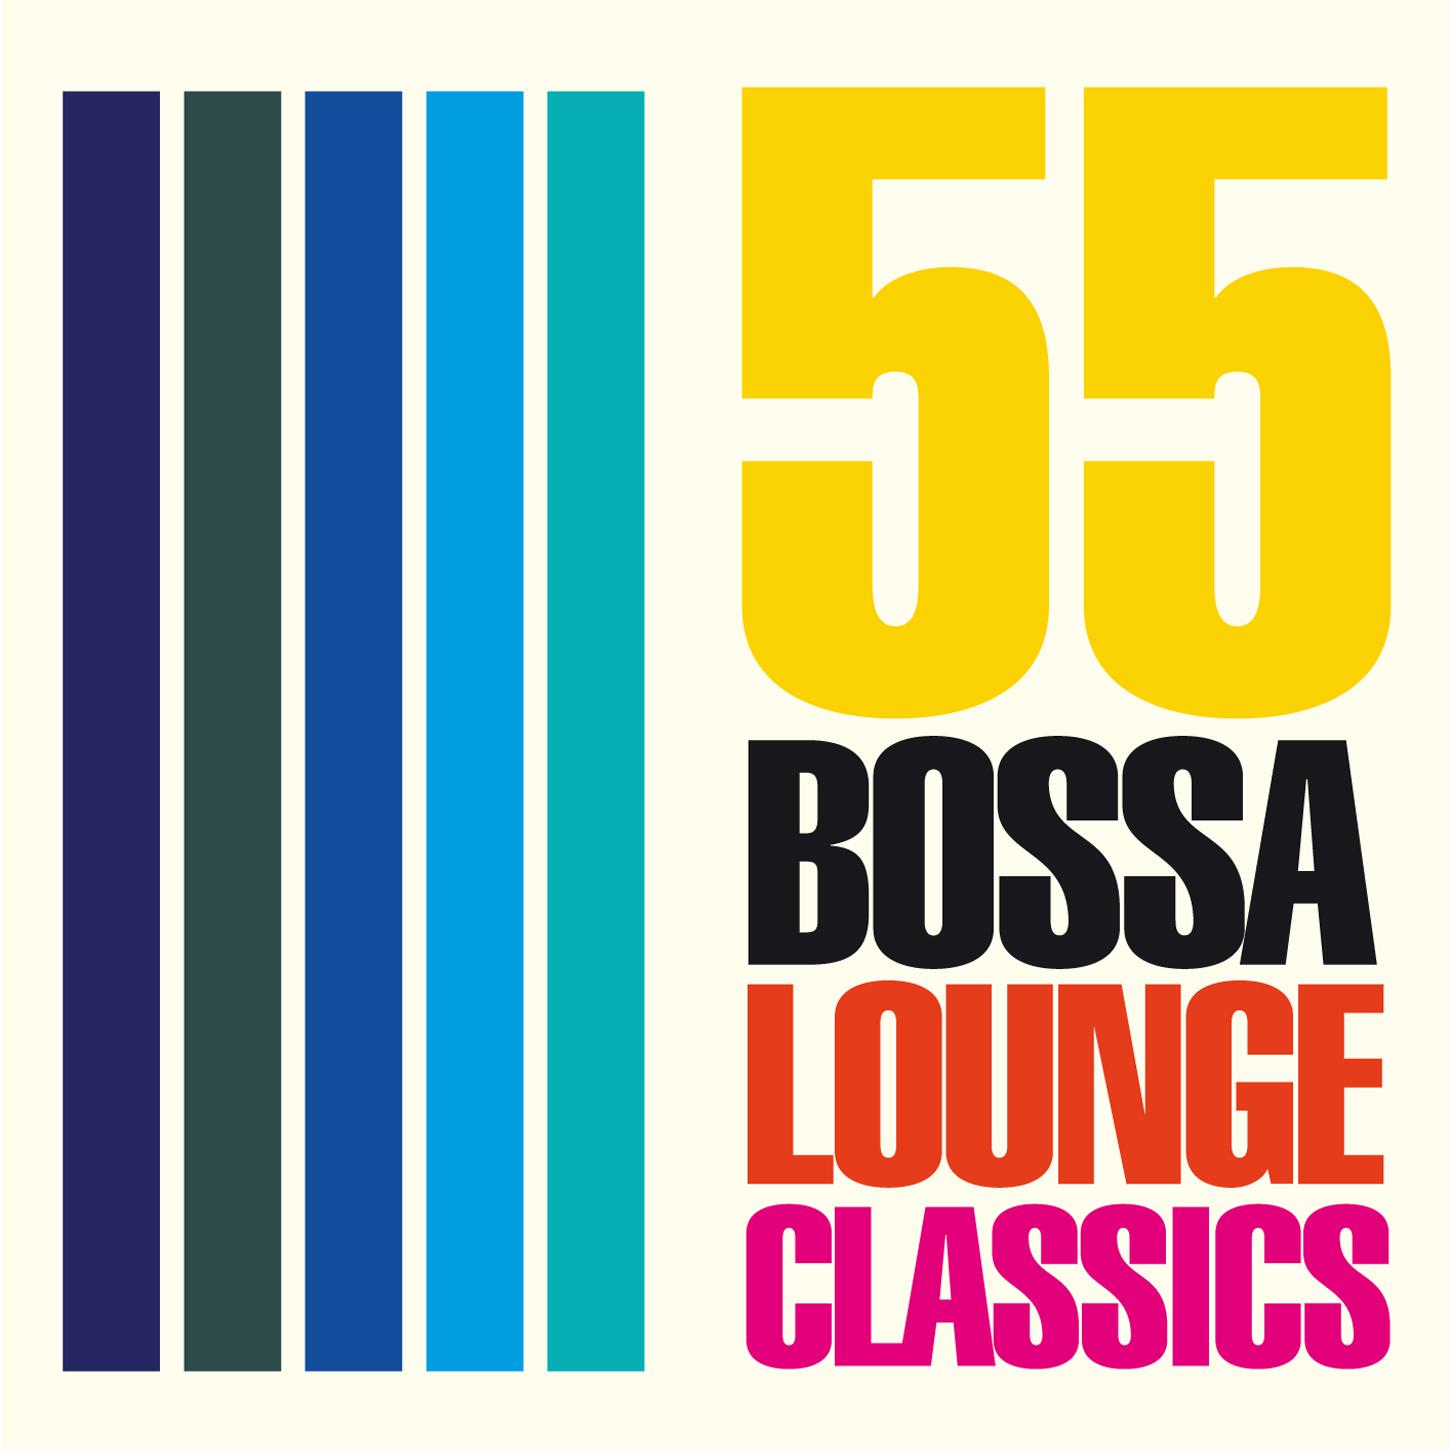 55 Bossa Lounge Classics